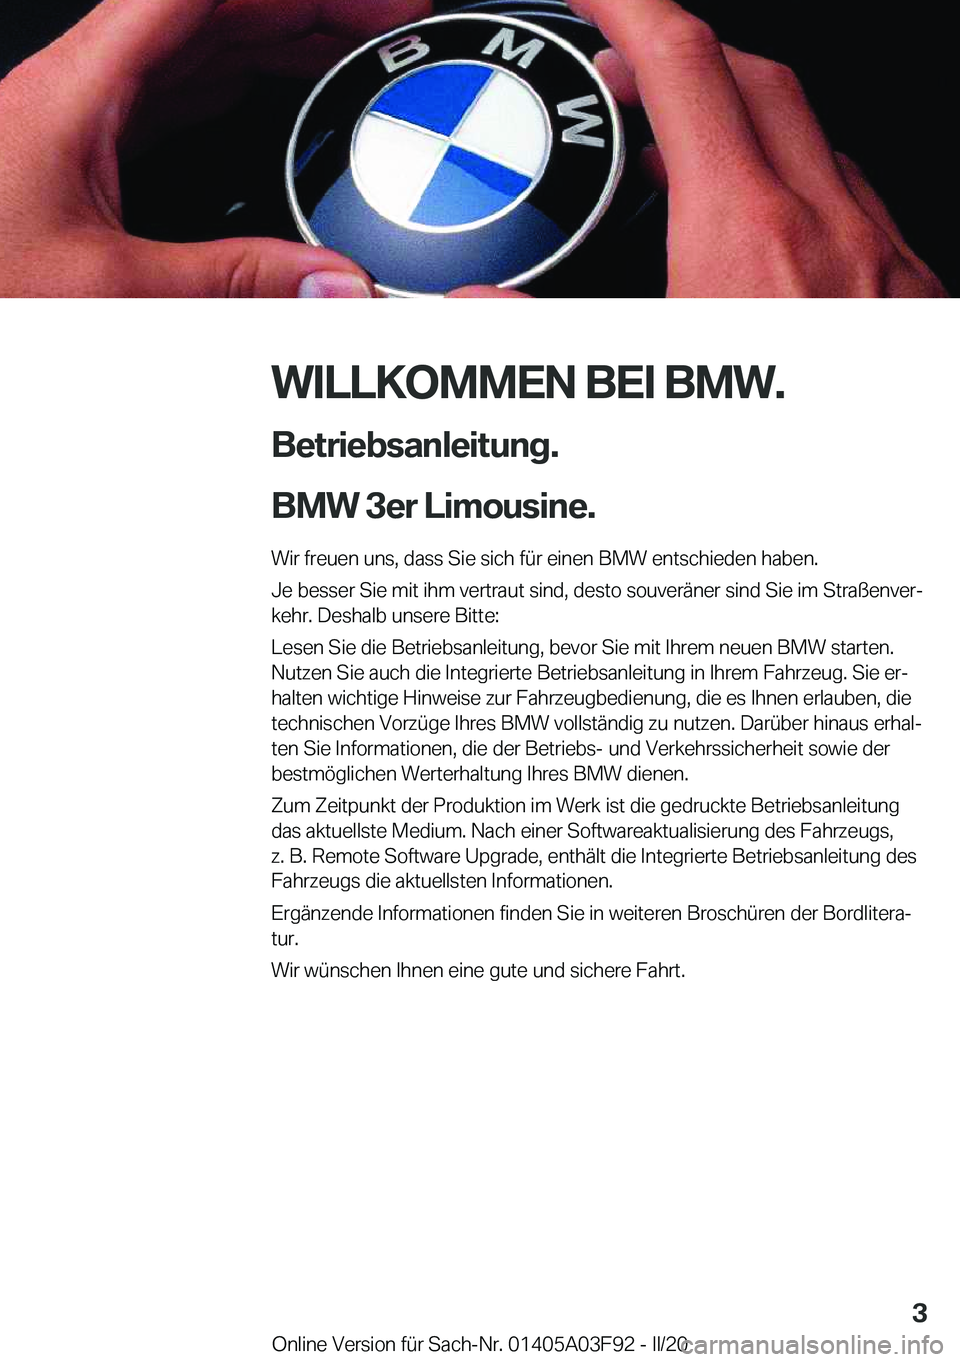 BMW 3 SERIES 2020  Betriebsanleitungen (in German) �W�I�L�L�K�O�M�M�E�N��B�E�I��B�M�W�.�B�e�t�r�i�e�b�s�a�n�l�e�i�t�u�n�g�.
�B�M�W��3�e�r��L�i�m�o�u�s�i�n�e�. �W�i�r��f�r�e�u�e�n��u�n�s�,��d�a�s�s��S�i�e��s�i�c�h��f�